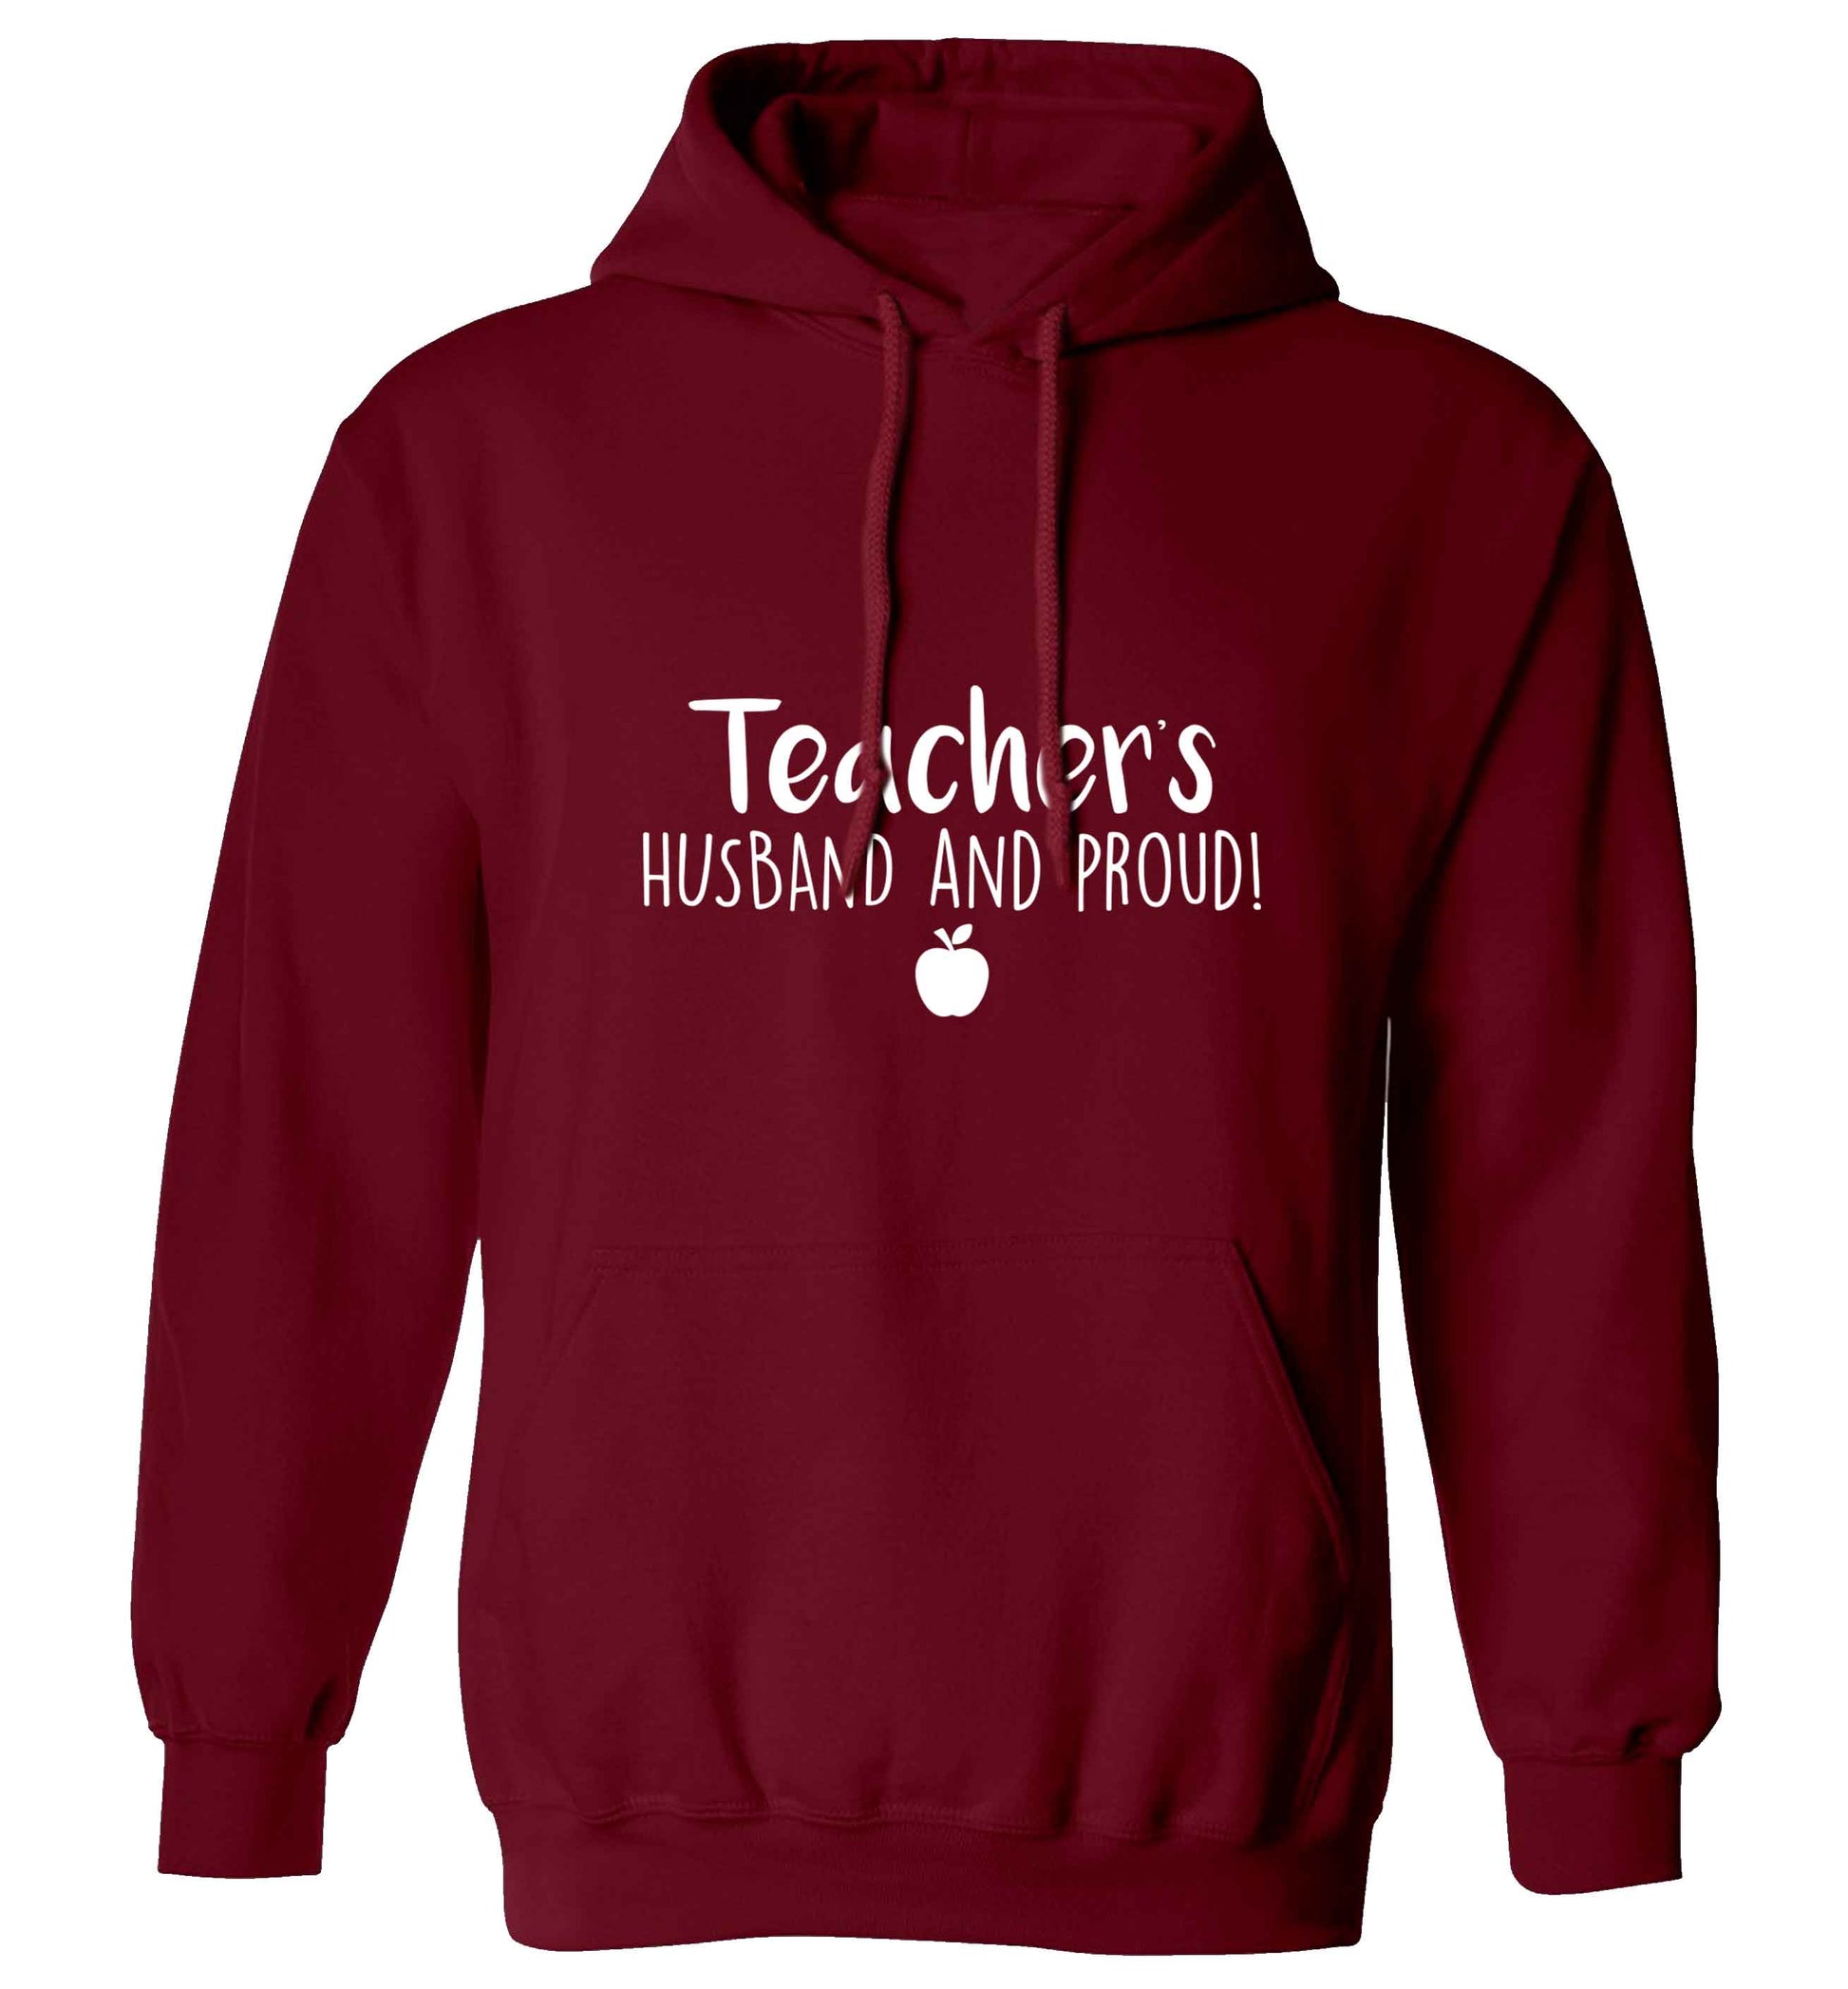 Teachers husband and proud adults unisex maroon hoodie 2XL